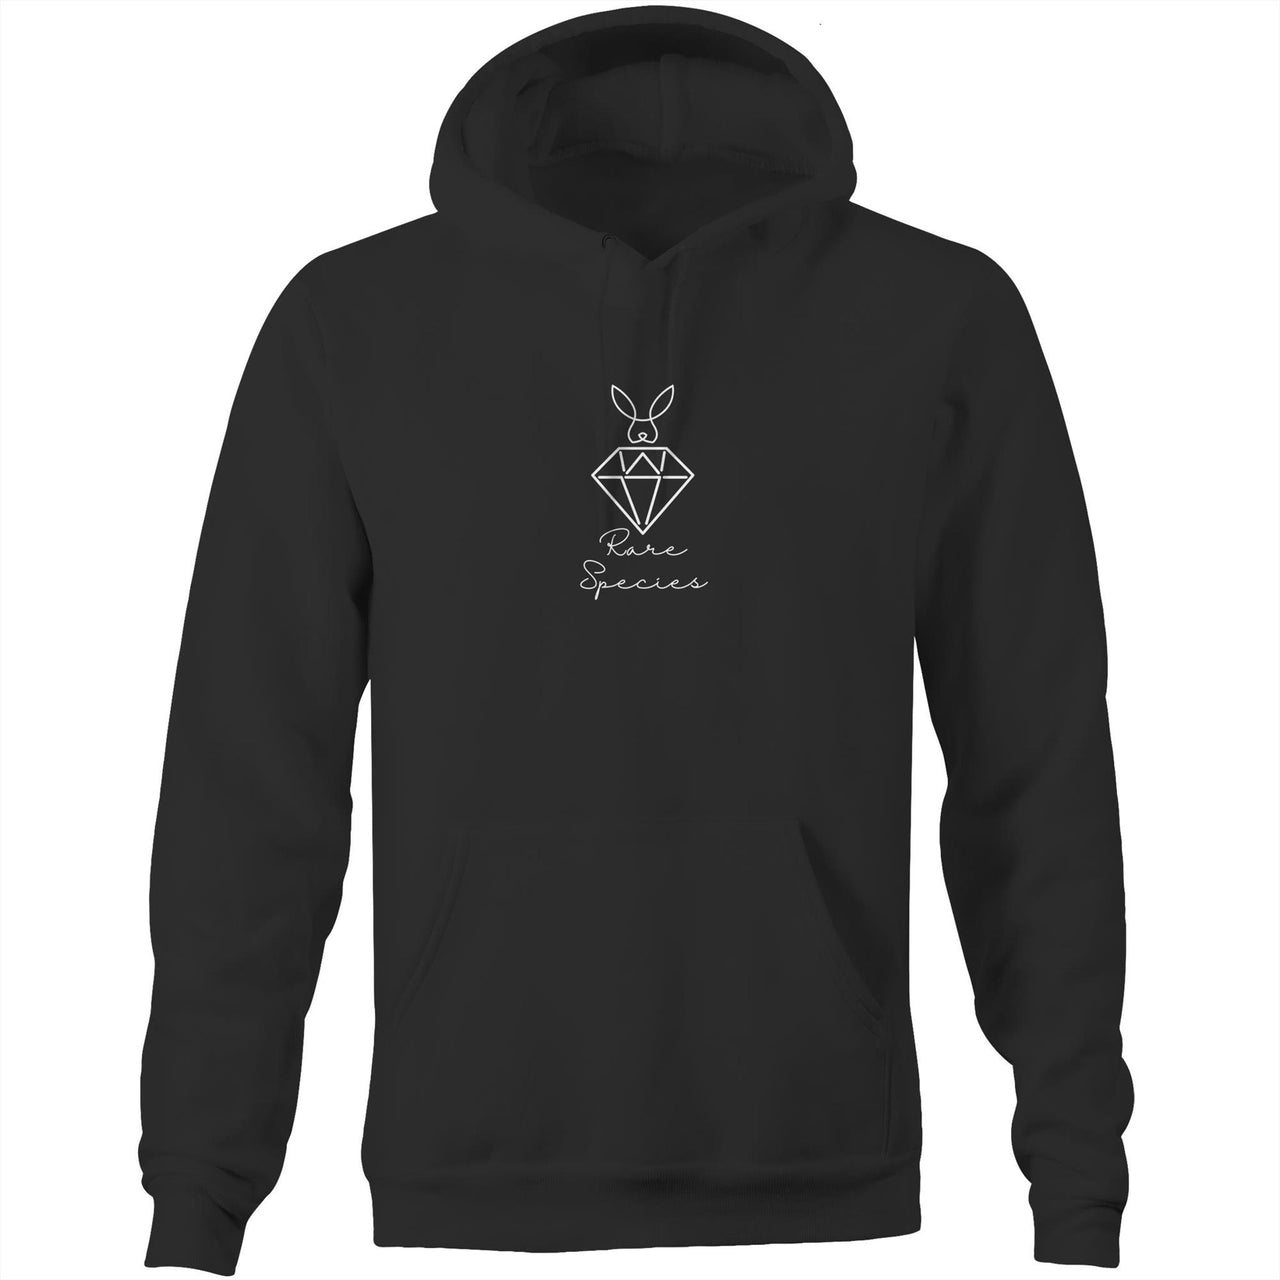 CBF Rare Species Pocket Hoodie Sweatshirt Black by CBF Clothing